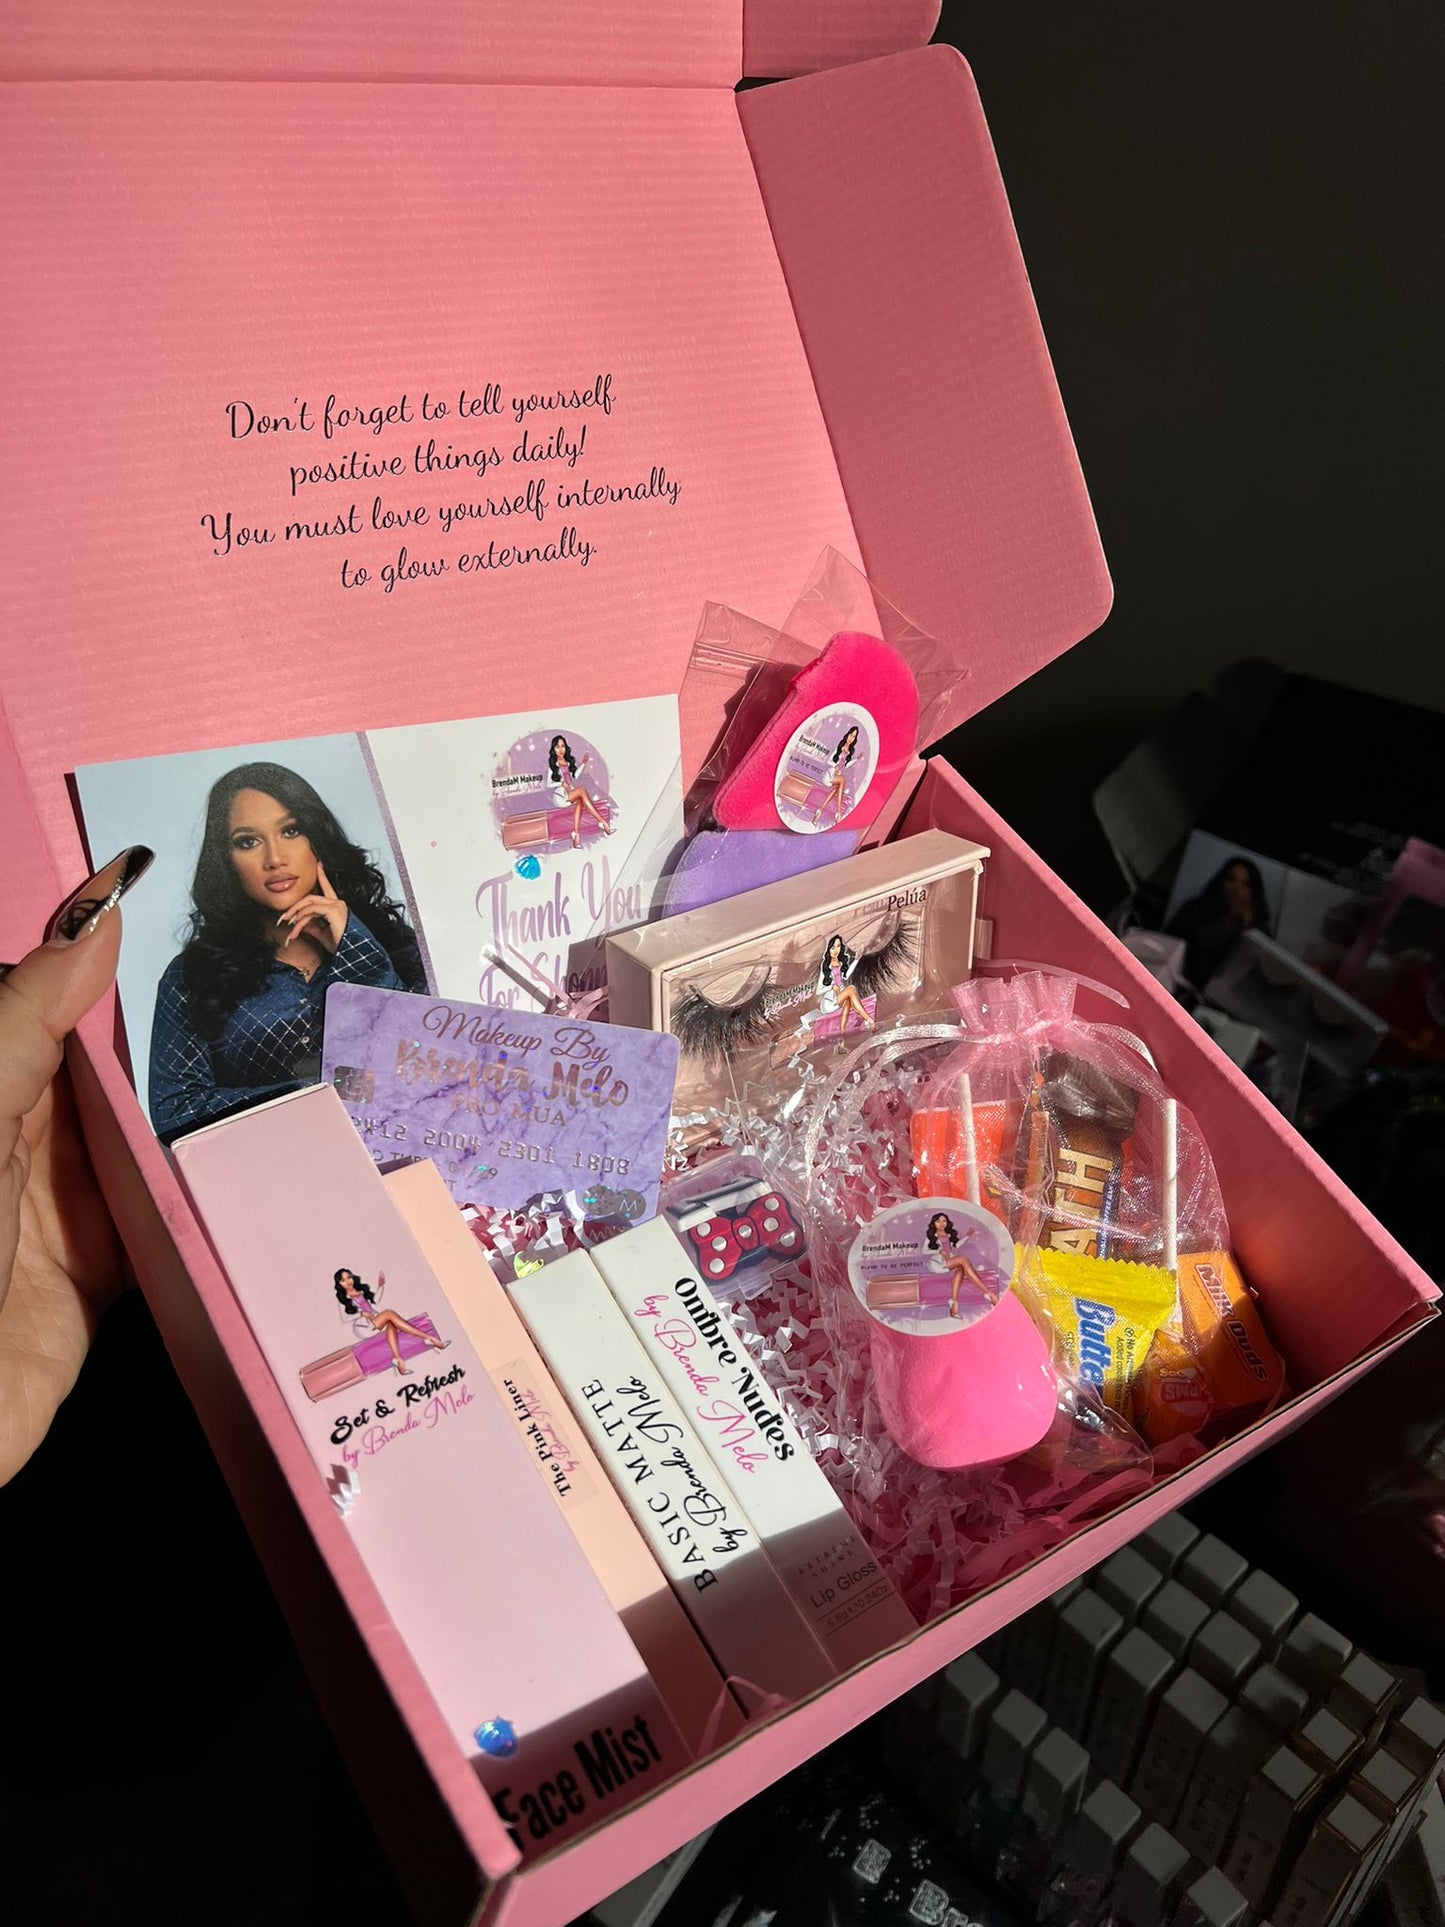 The Pink Beauty Box